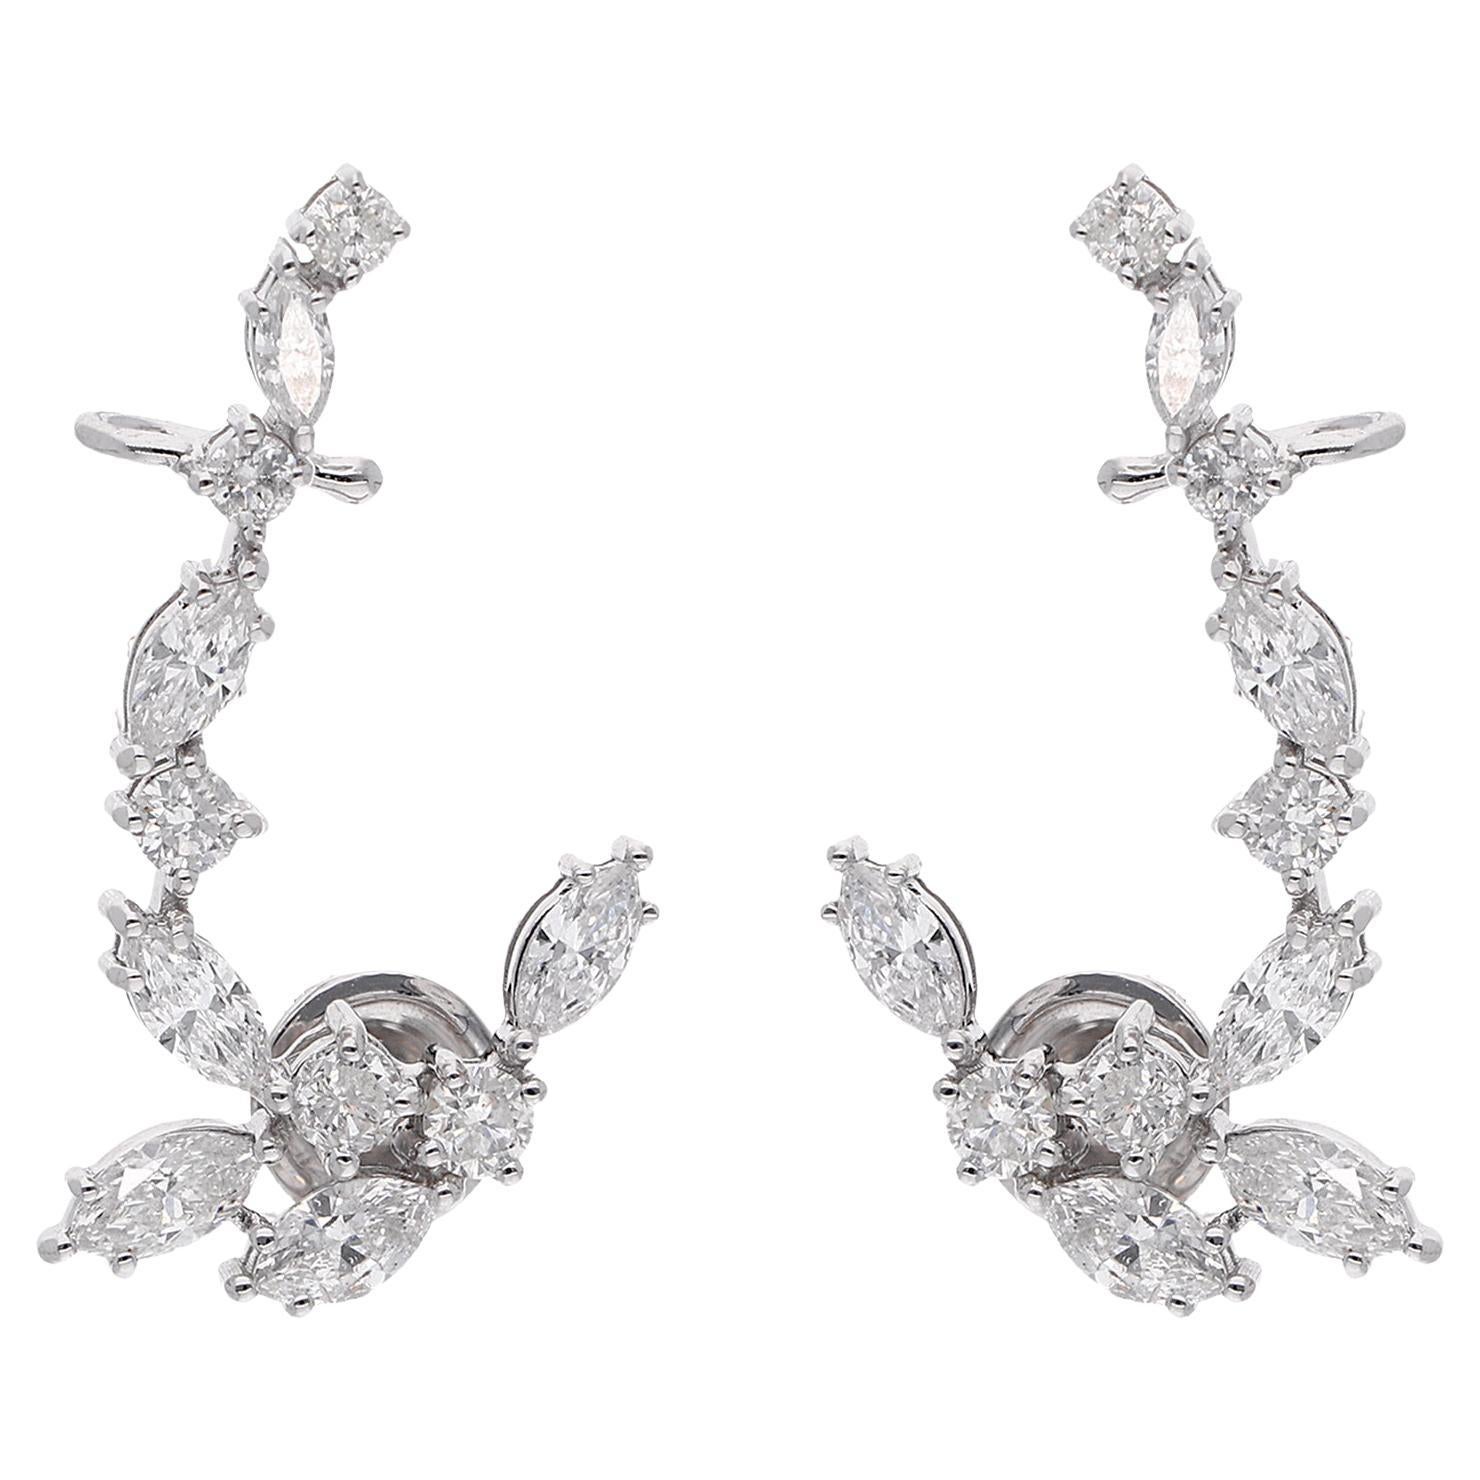 2.90 Carat Marquise Round Diamond Ear Cuff Earrings 18 Karat White Gold Jewelry